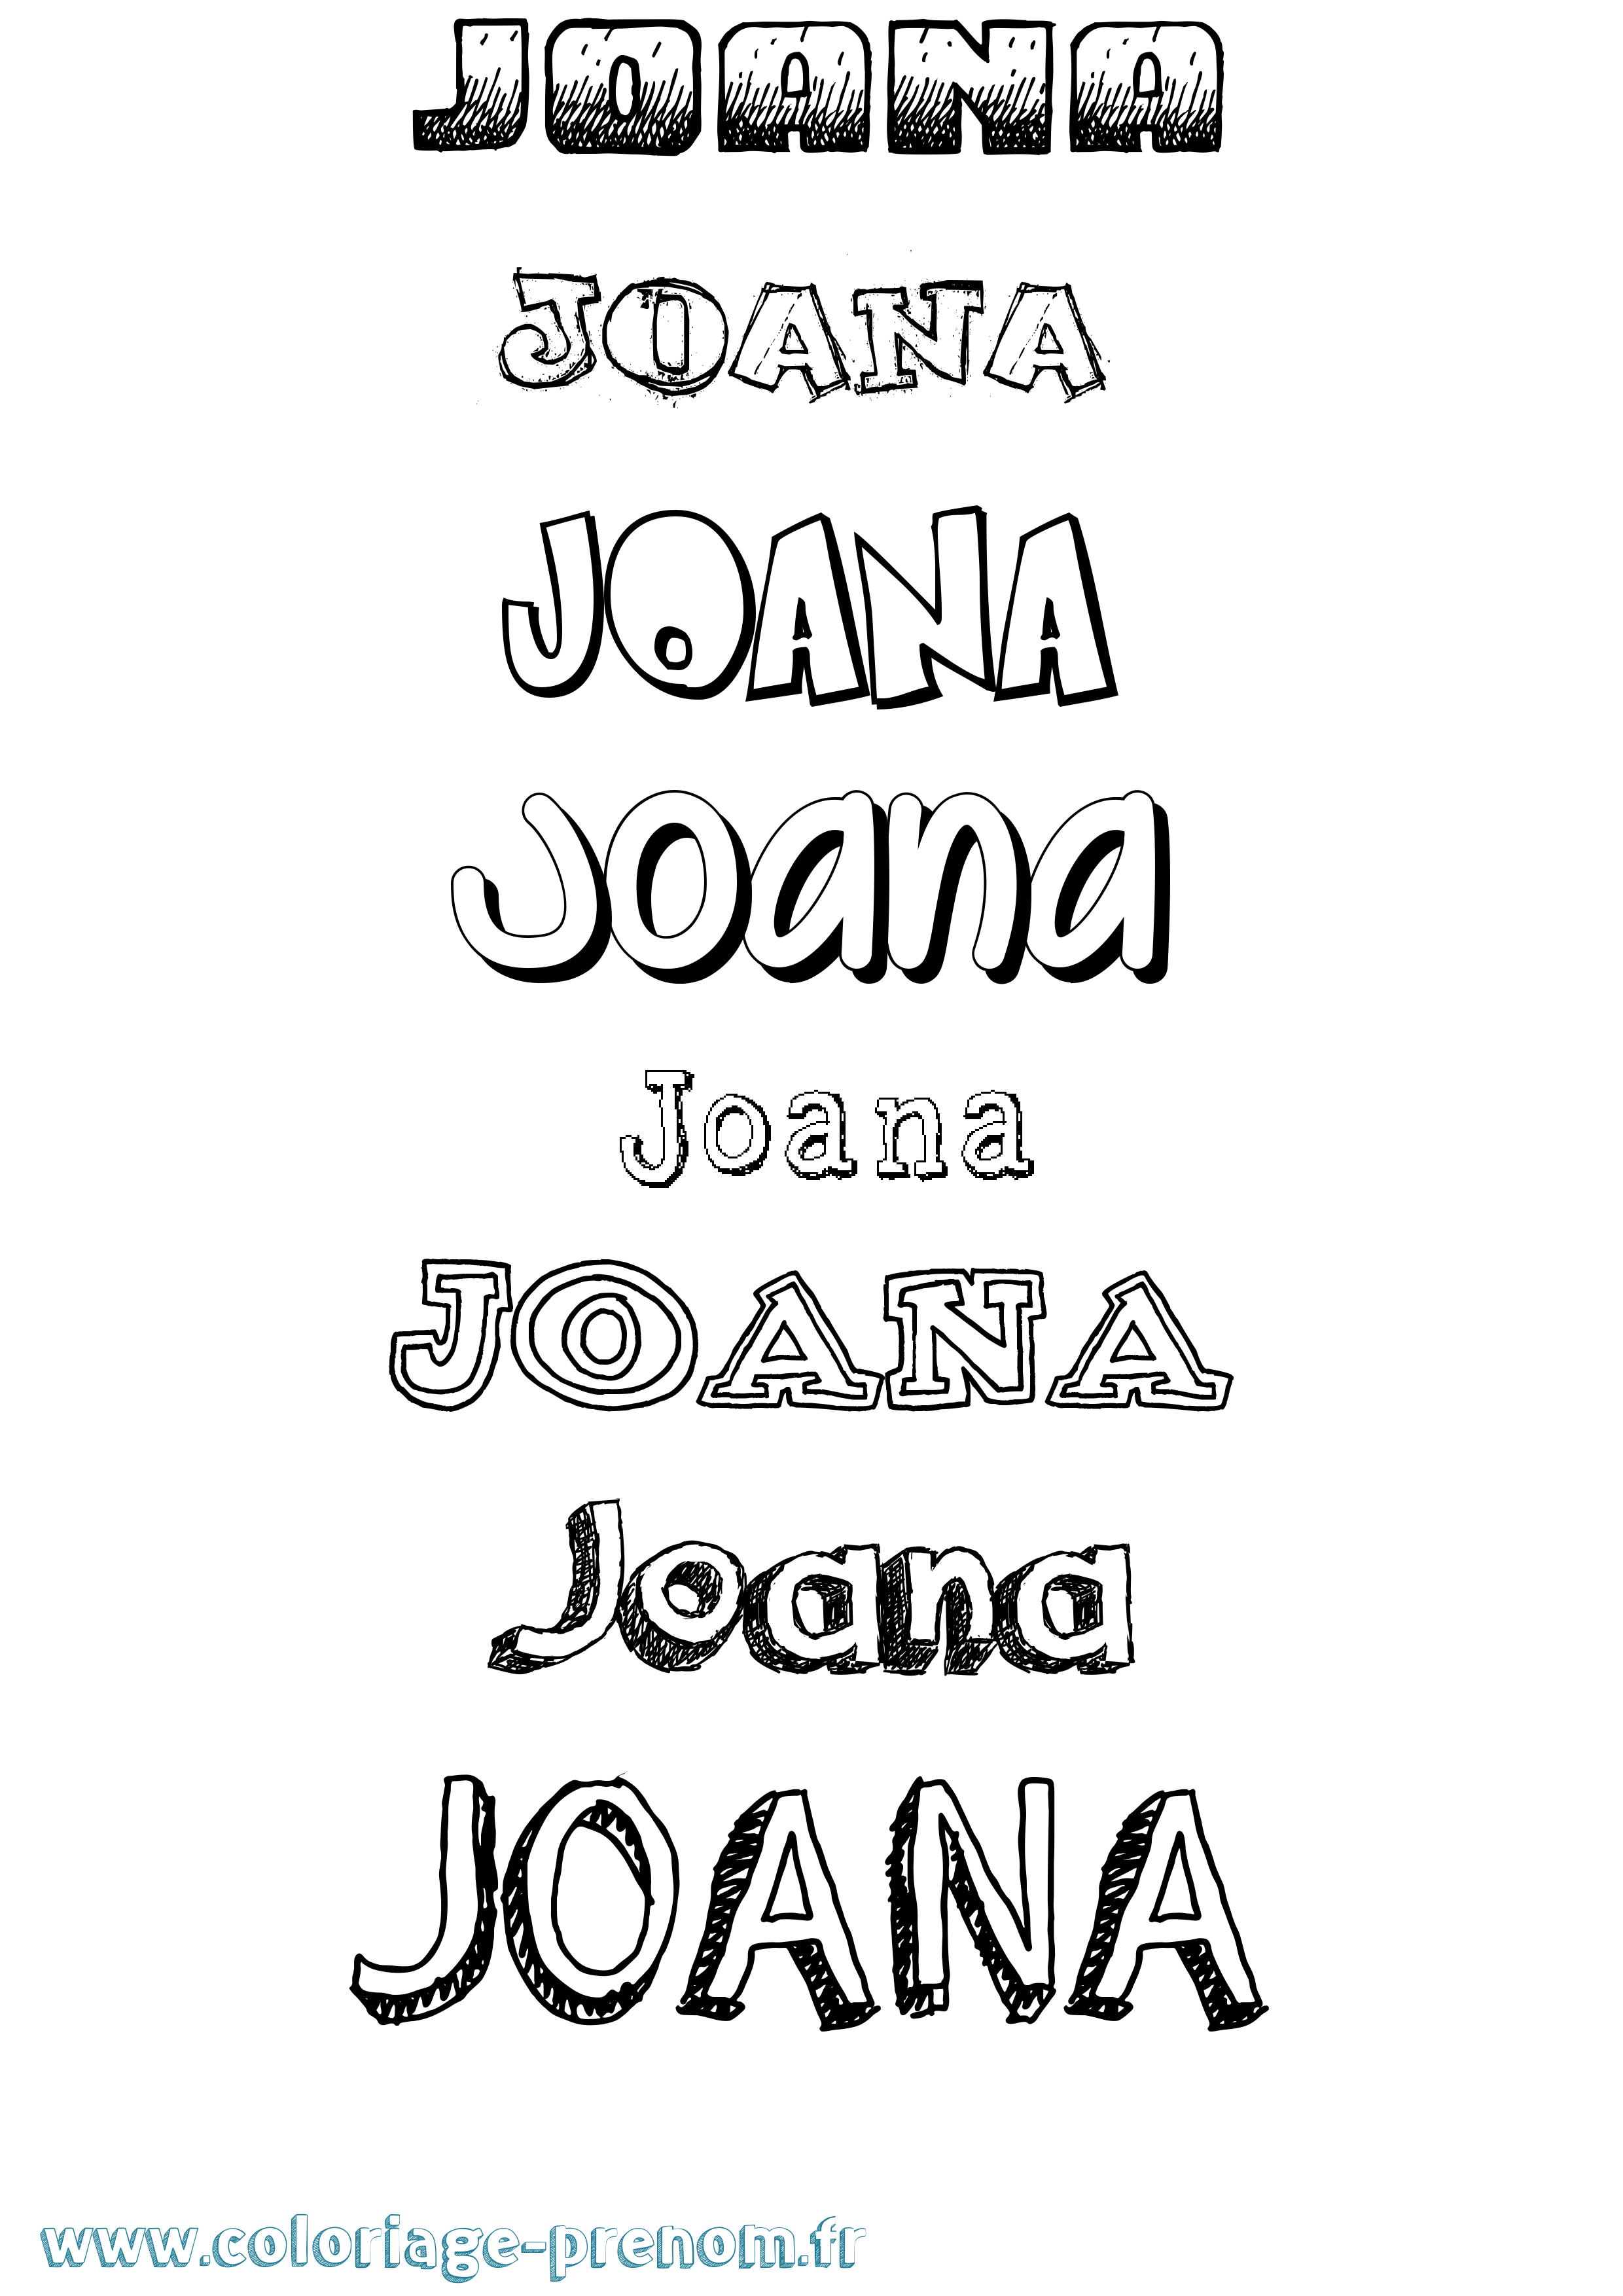 Coloriage prénom Joana